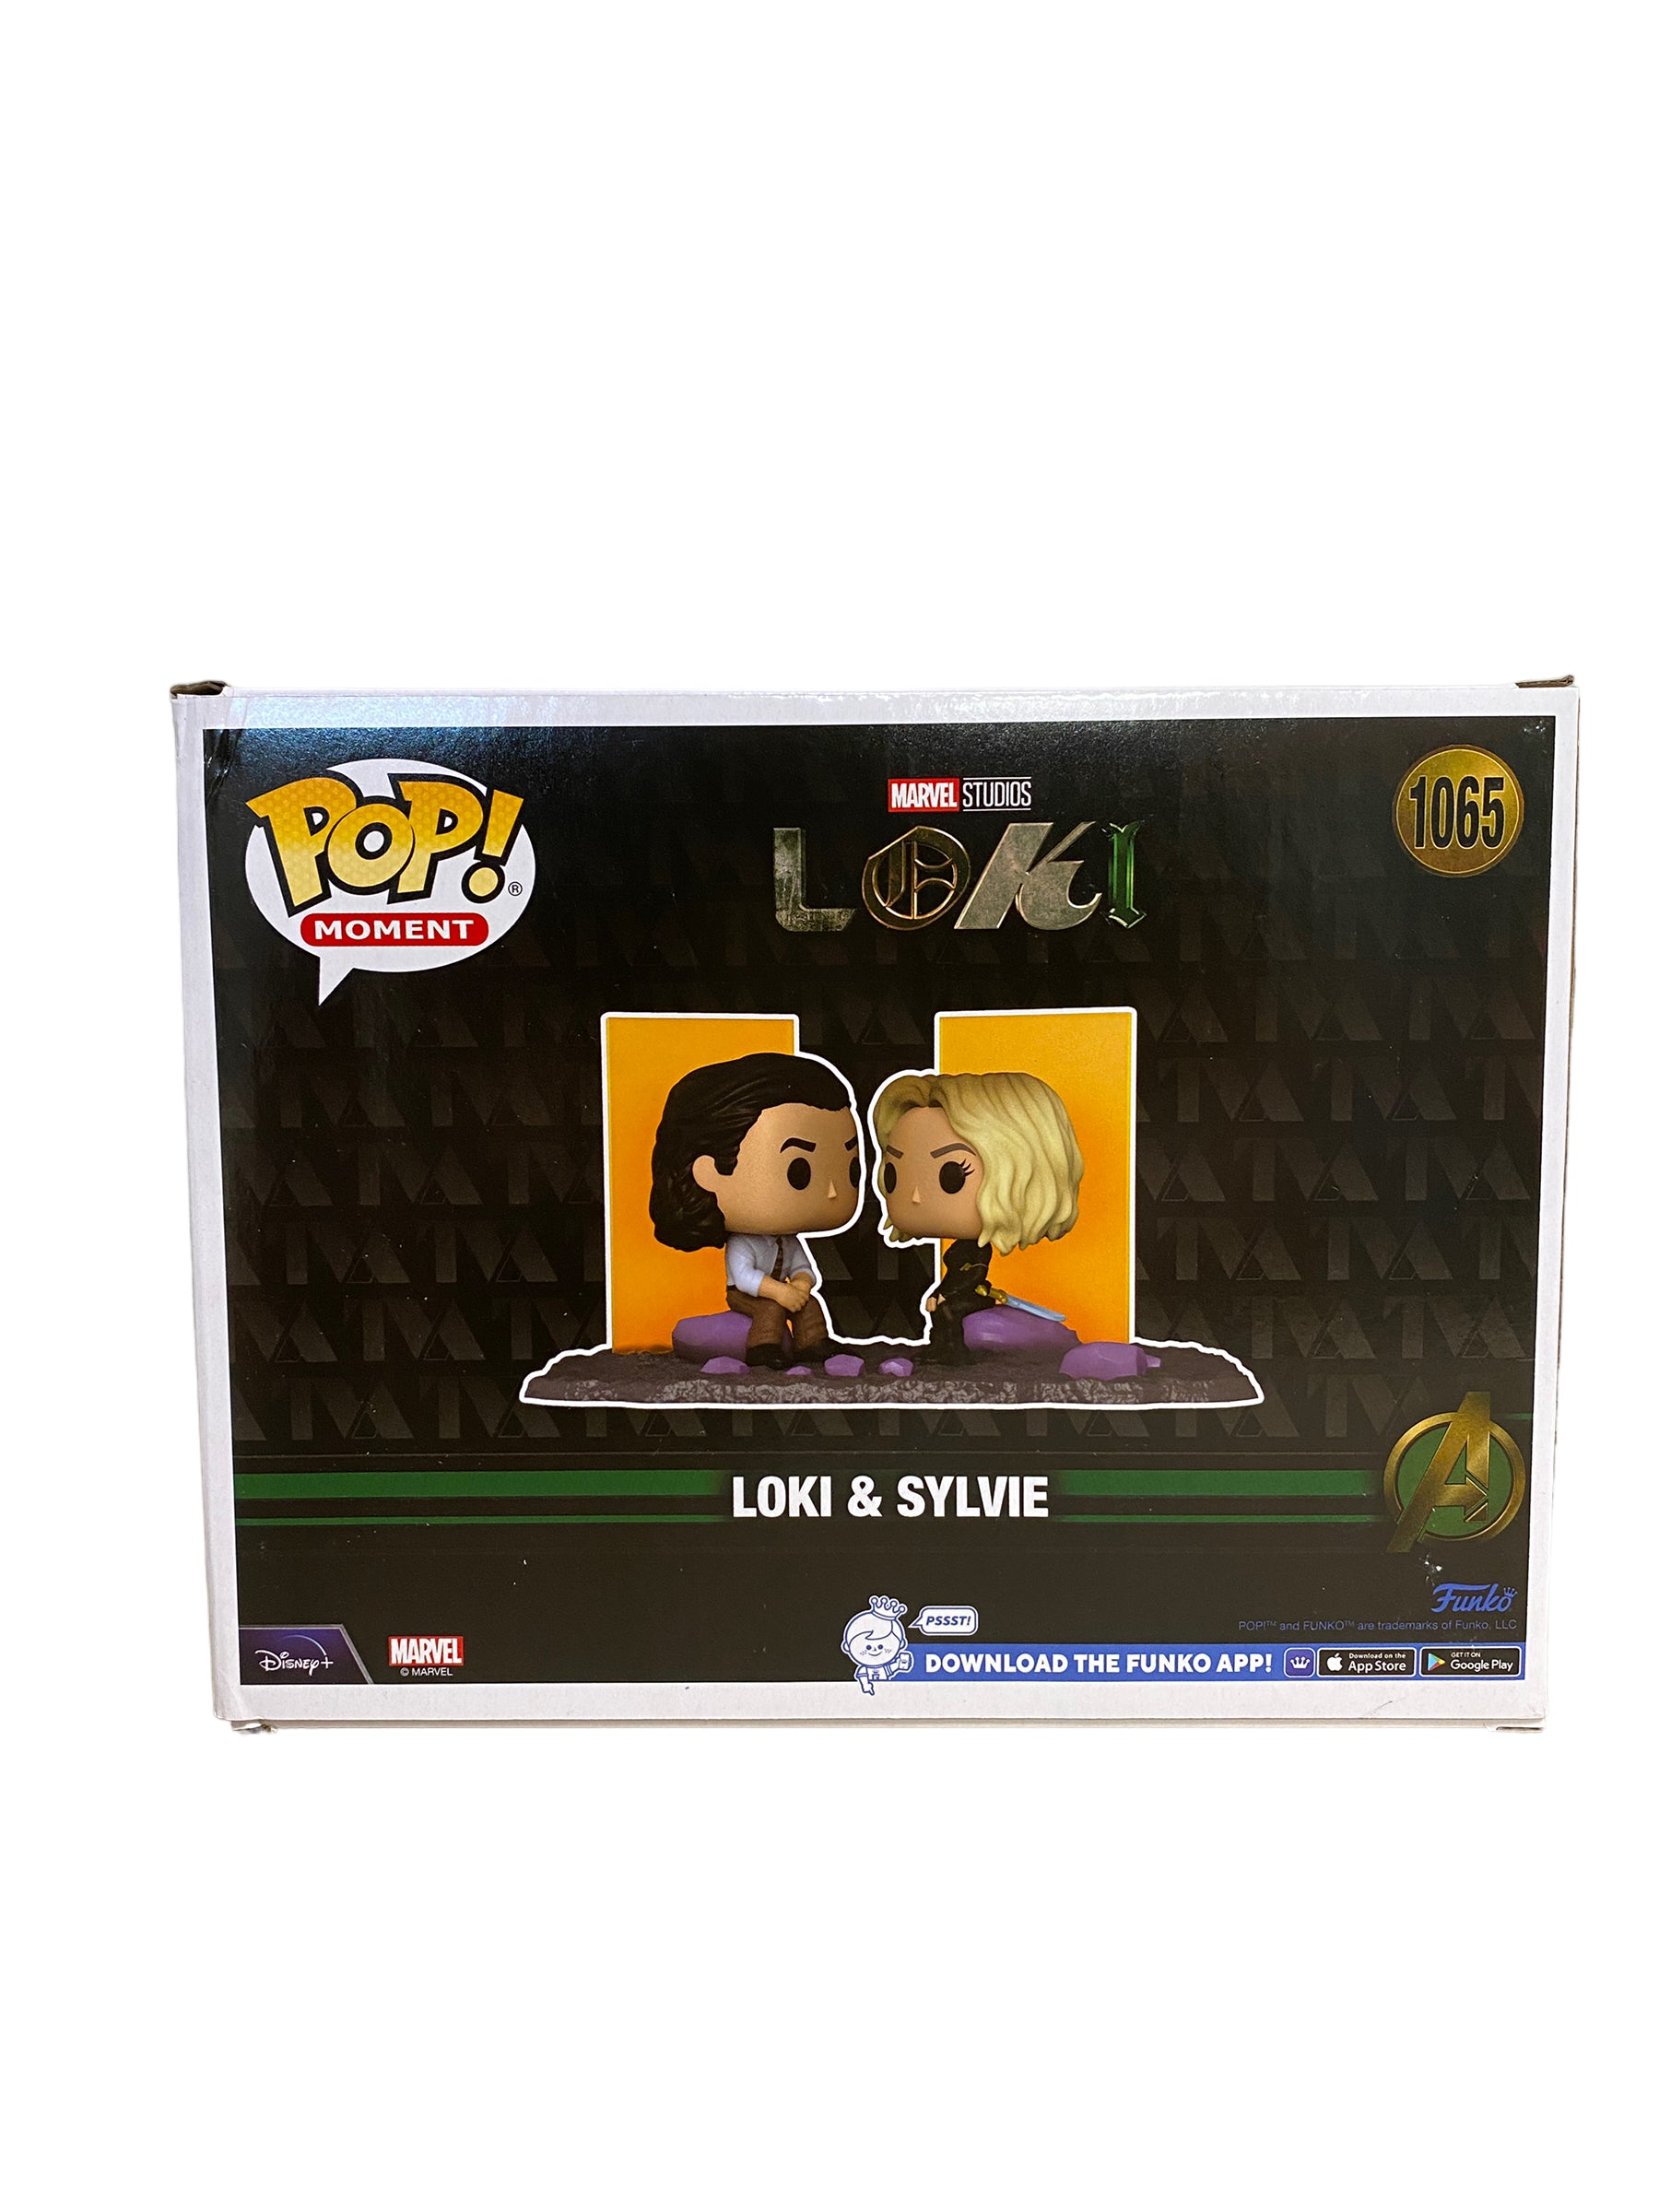 Loki & Sylvie #1065 Funko Pop Moment! - Loki - Target Exclusive - Condition 7.5/10